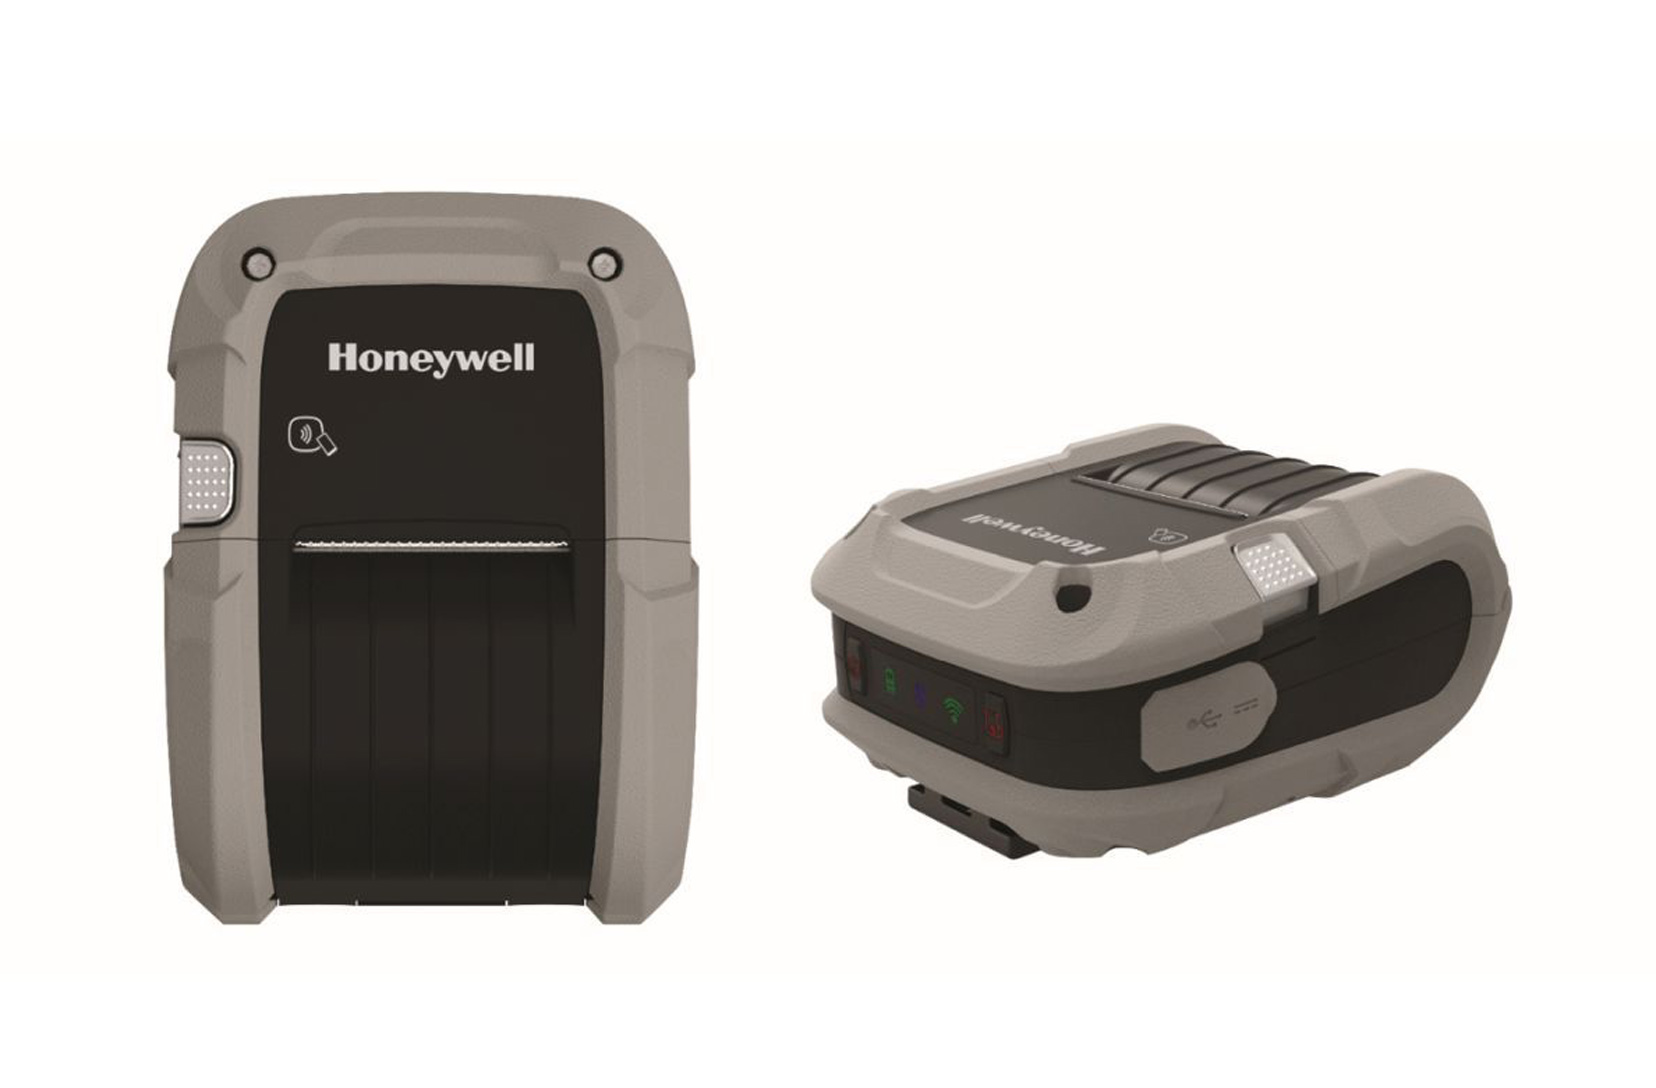 Honeywell Rp2, Rubino SRL - Macchine e Materiali per Etichette